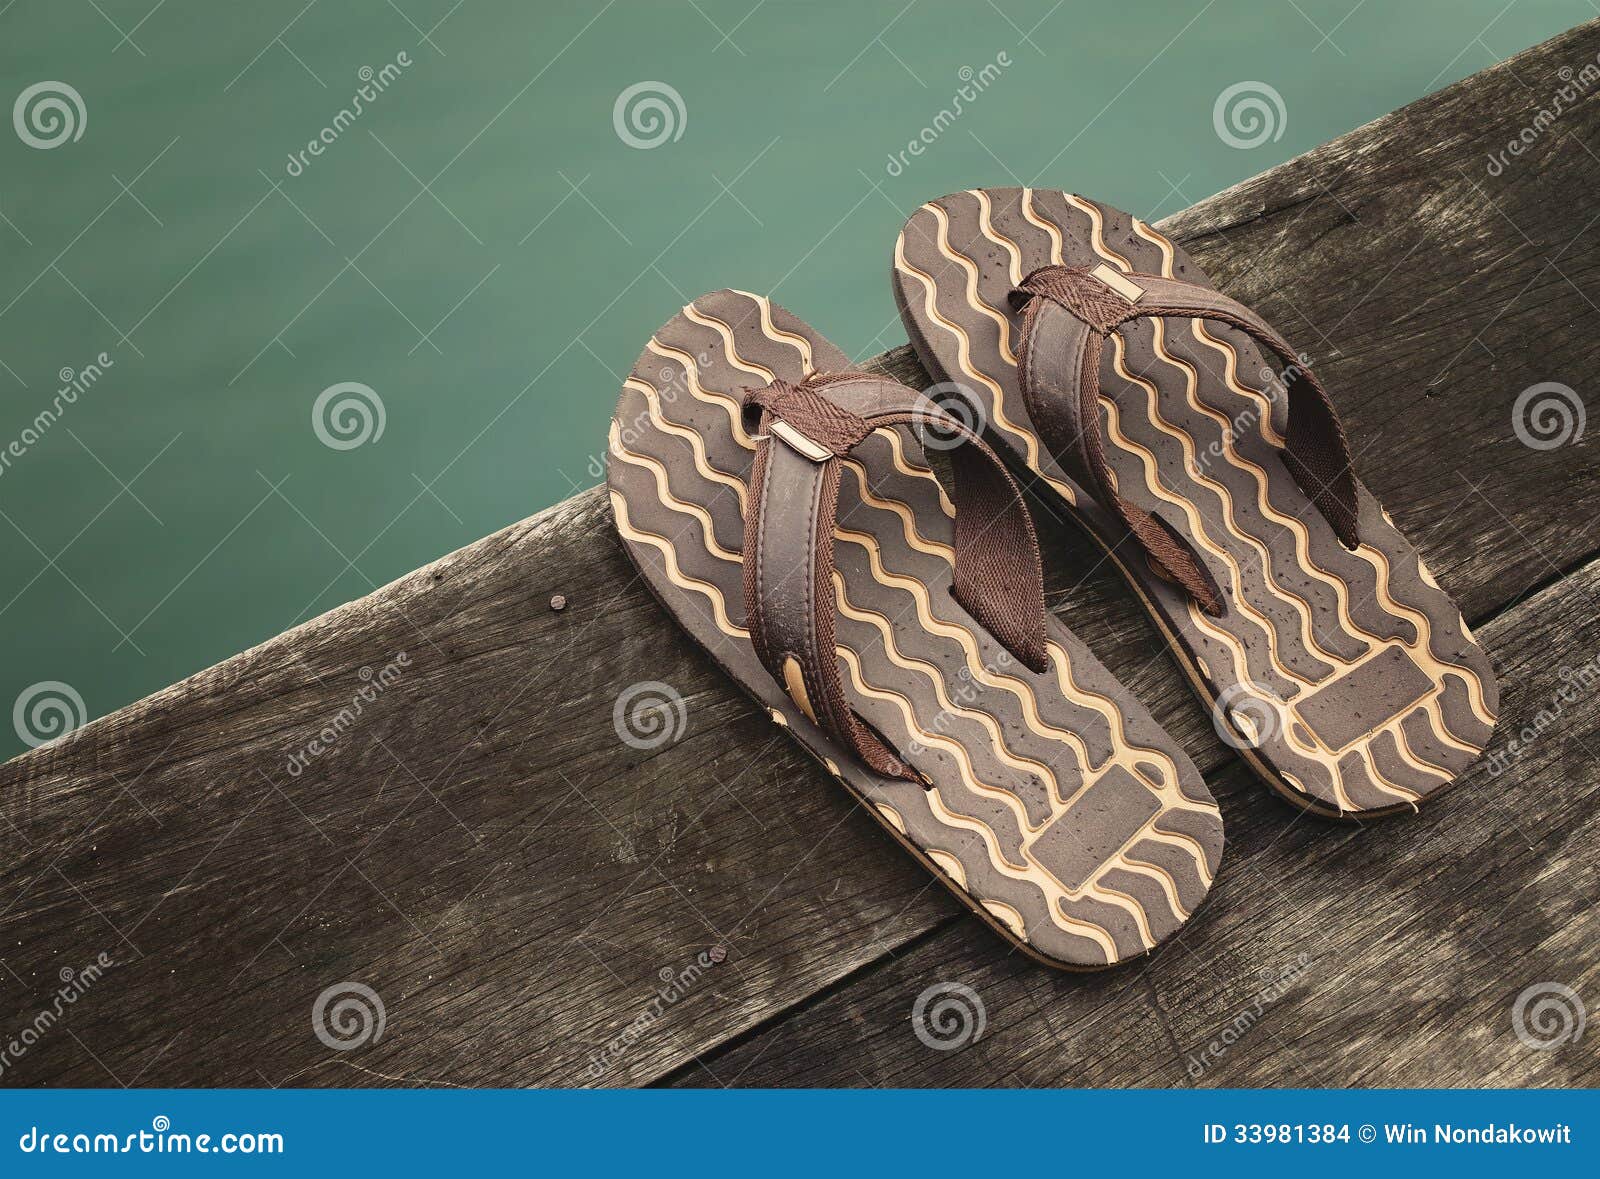 Sandals on wood stock photo. Image of lake, leisure, wood - 33981384